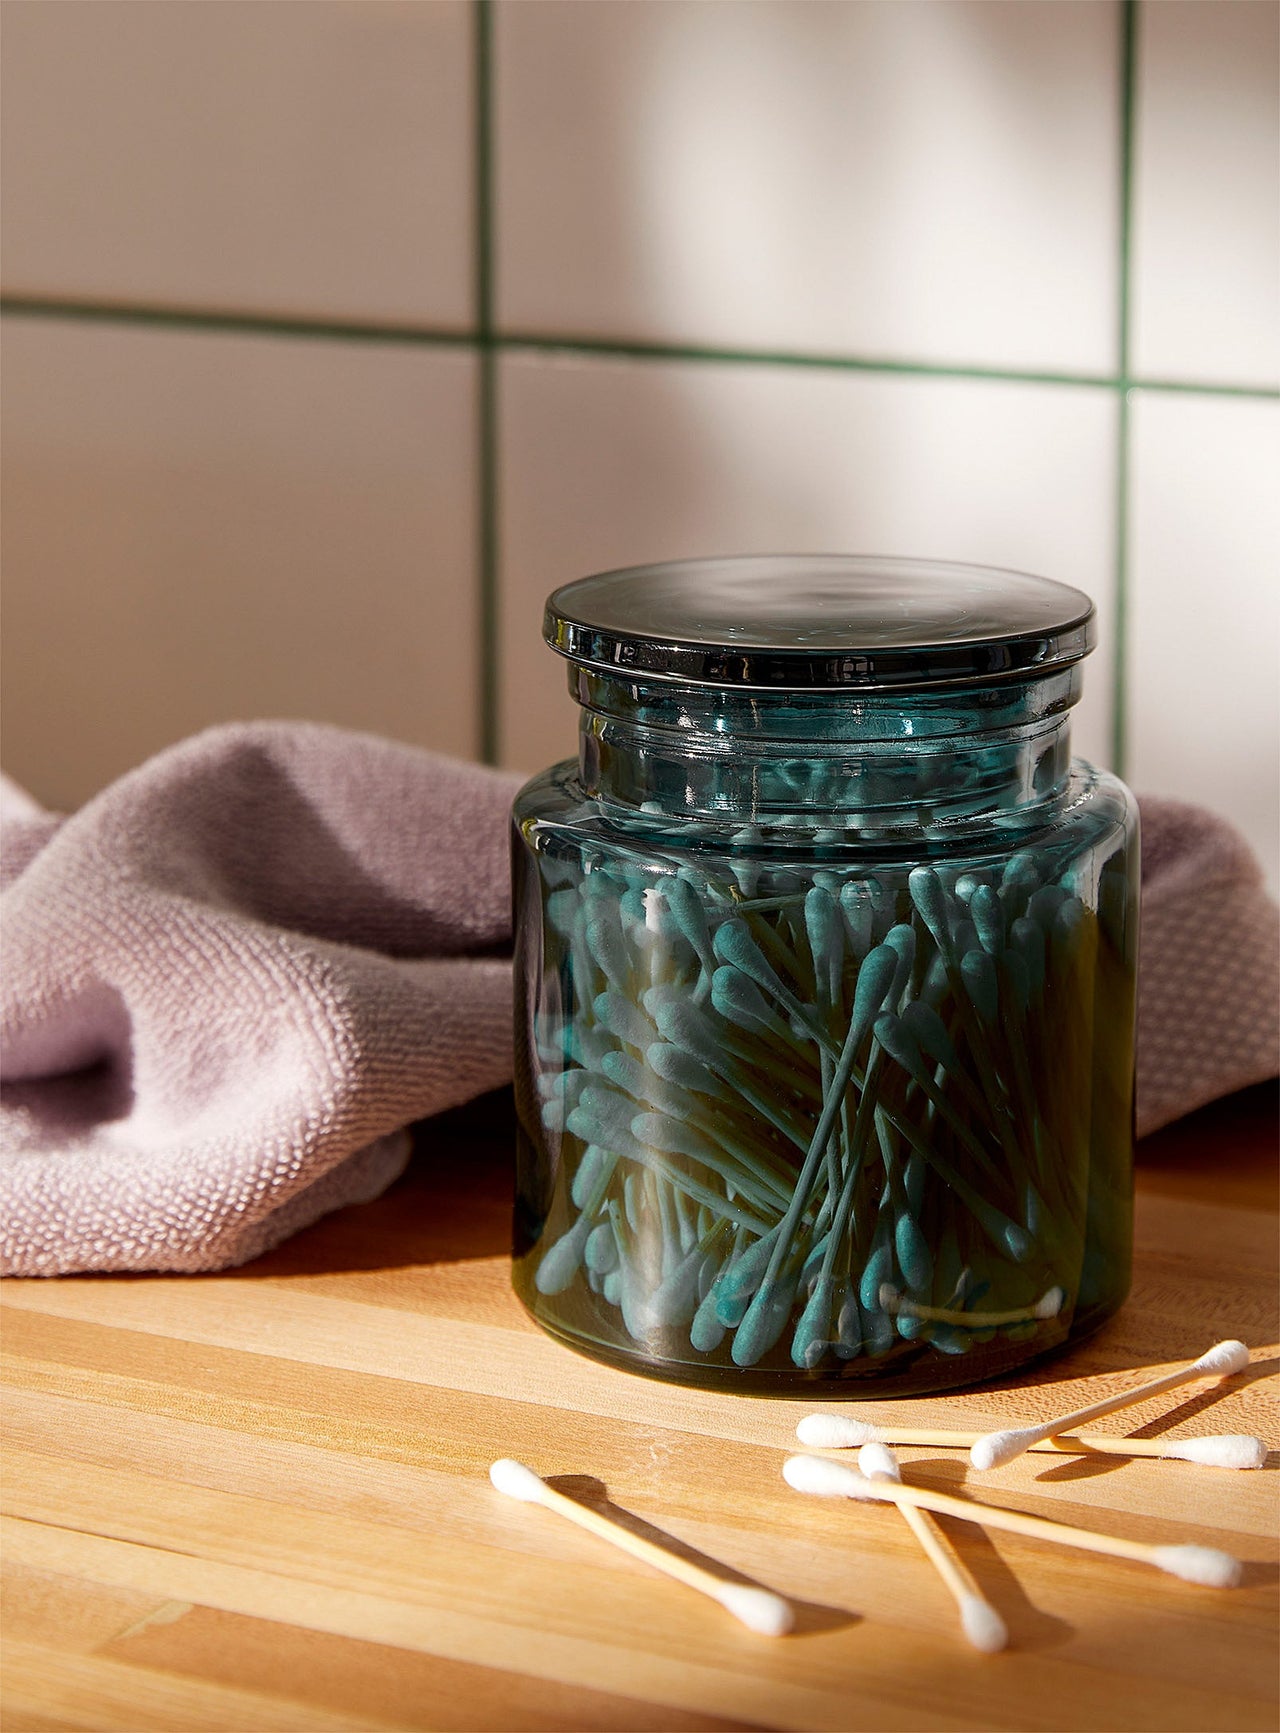 Translucent glass jar